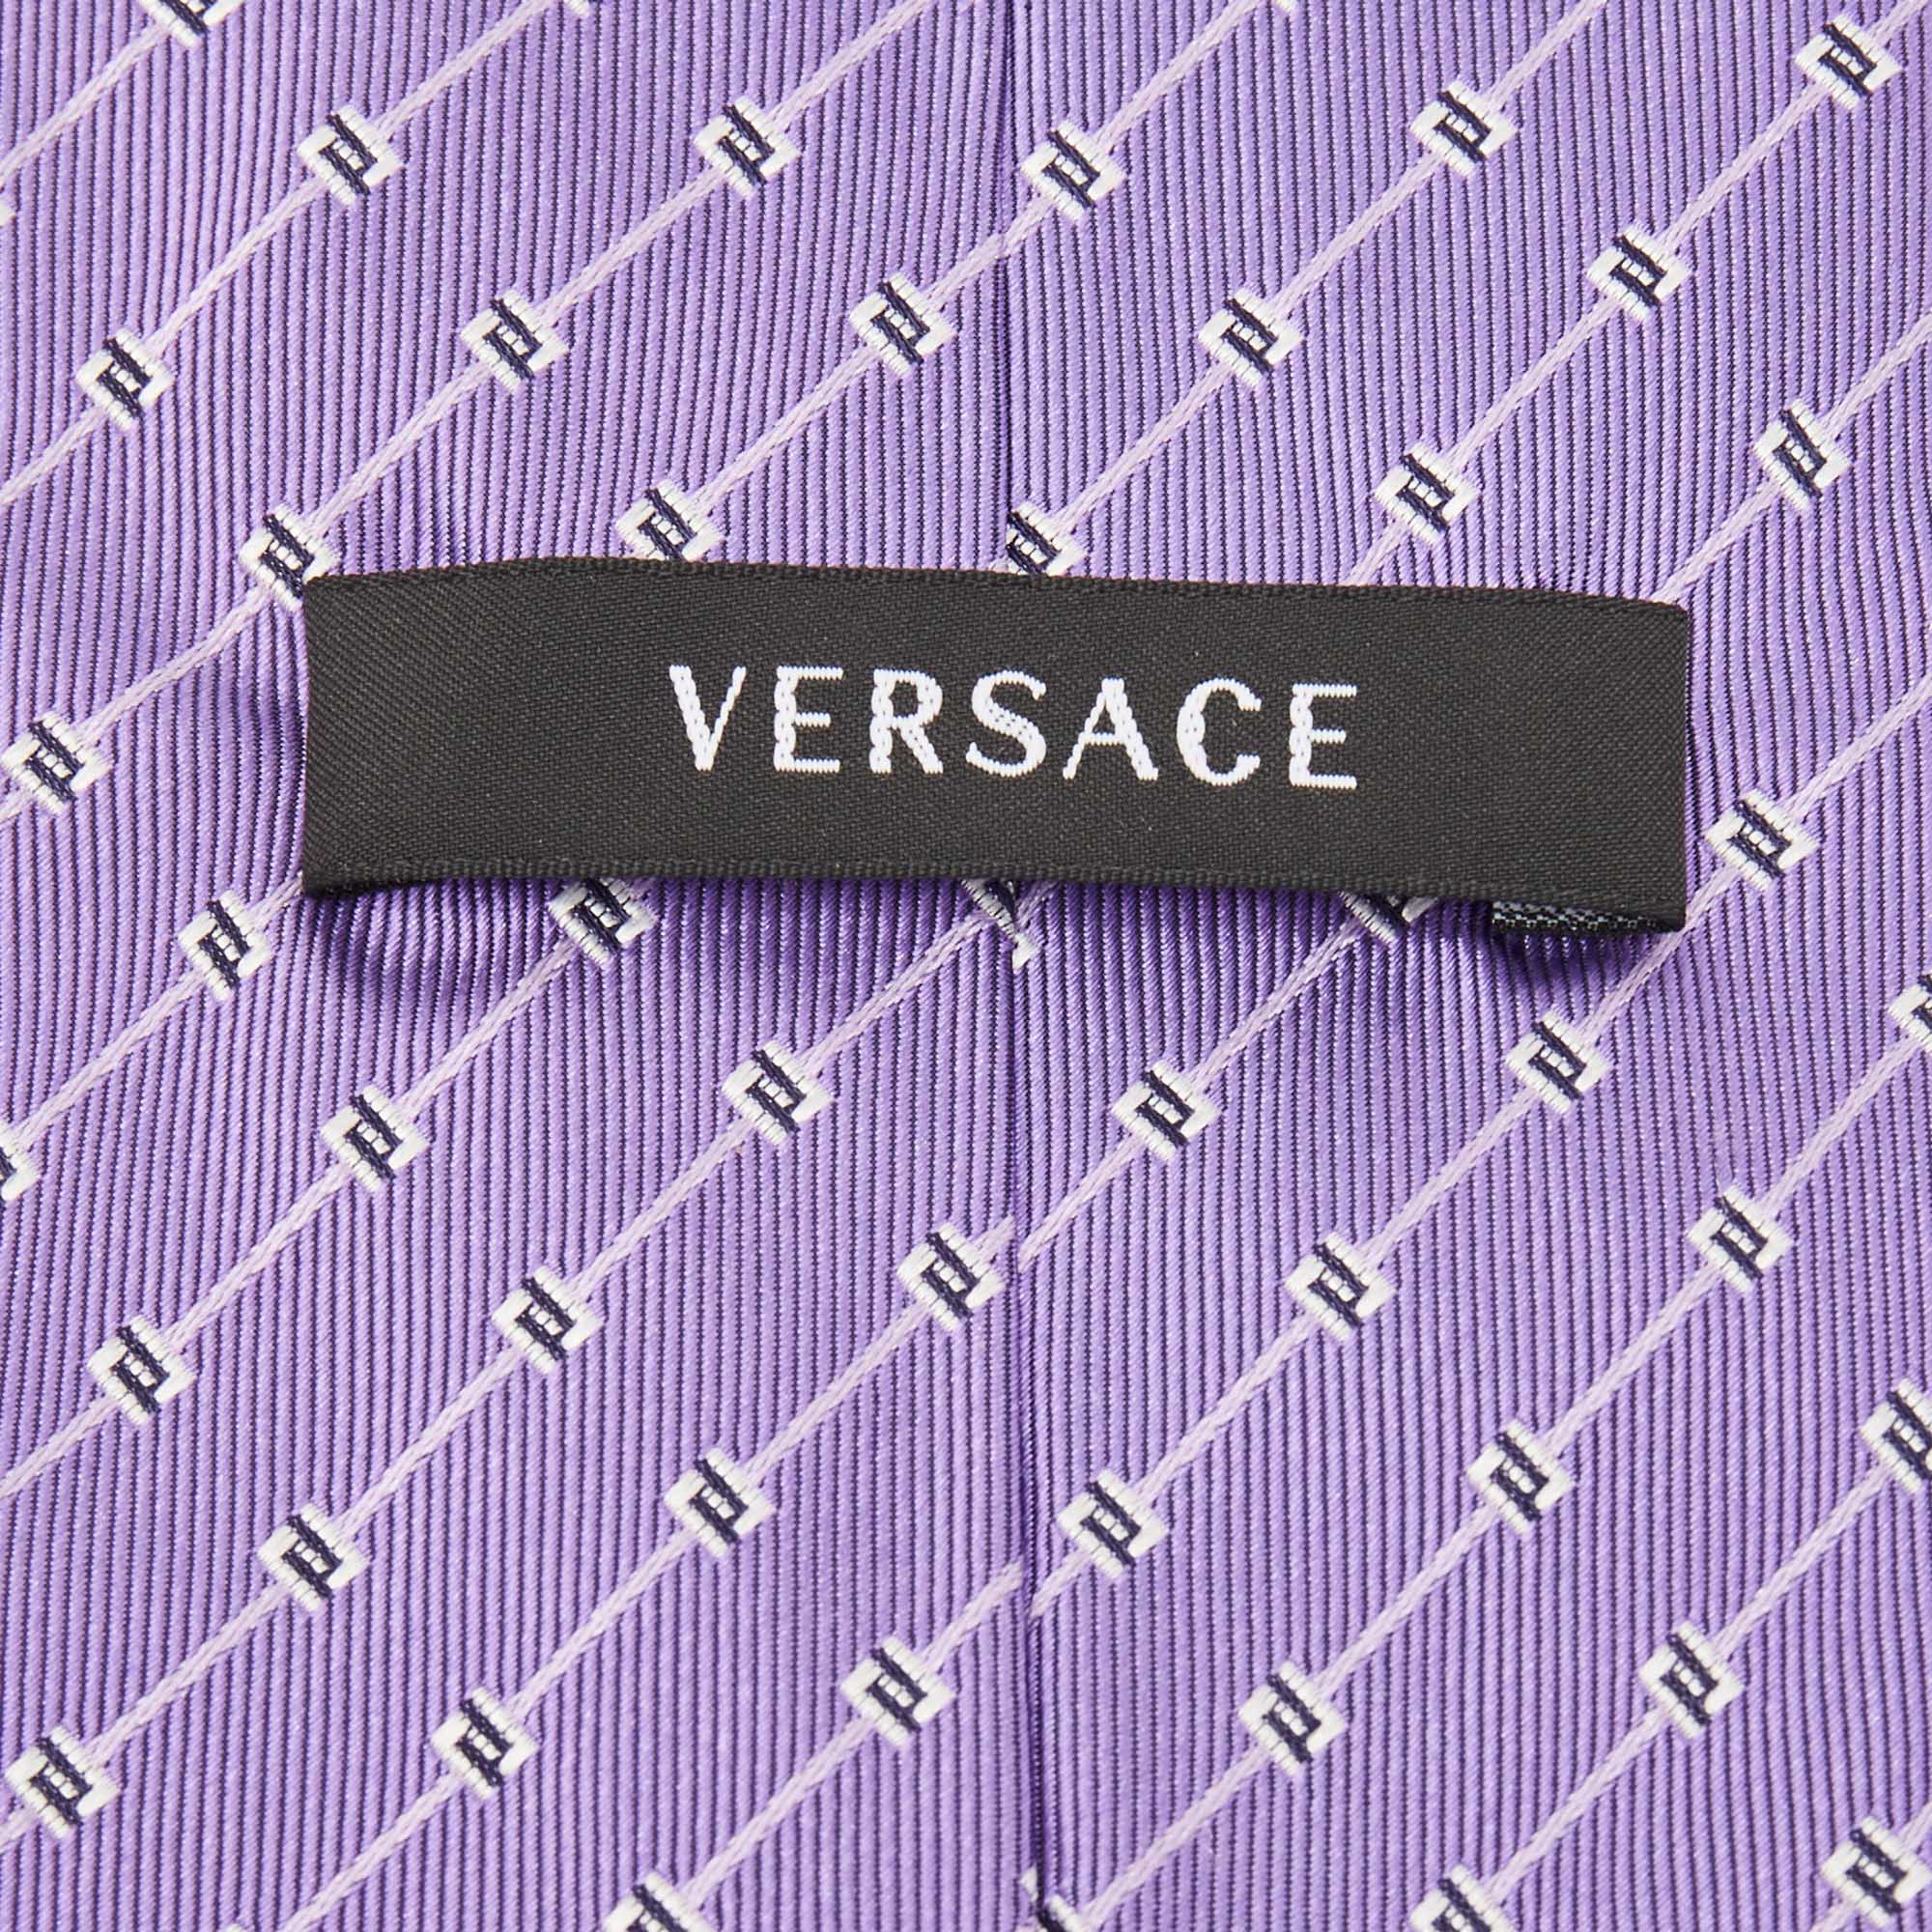 Versace Purple Greek Patterned Silk Tie